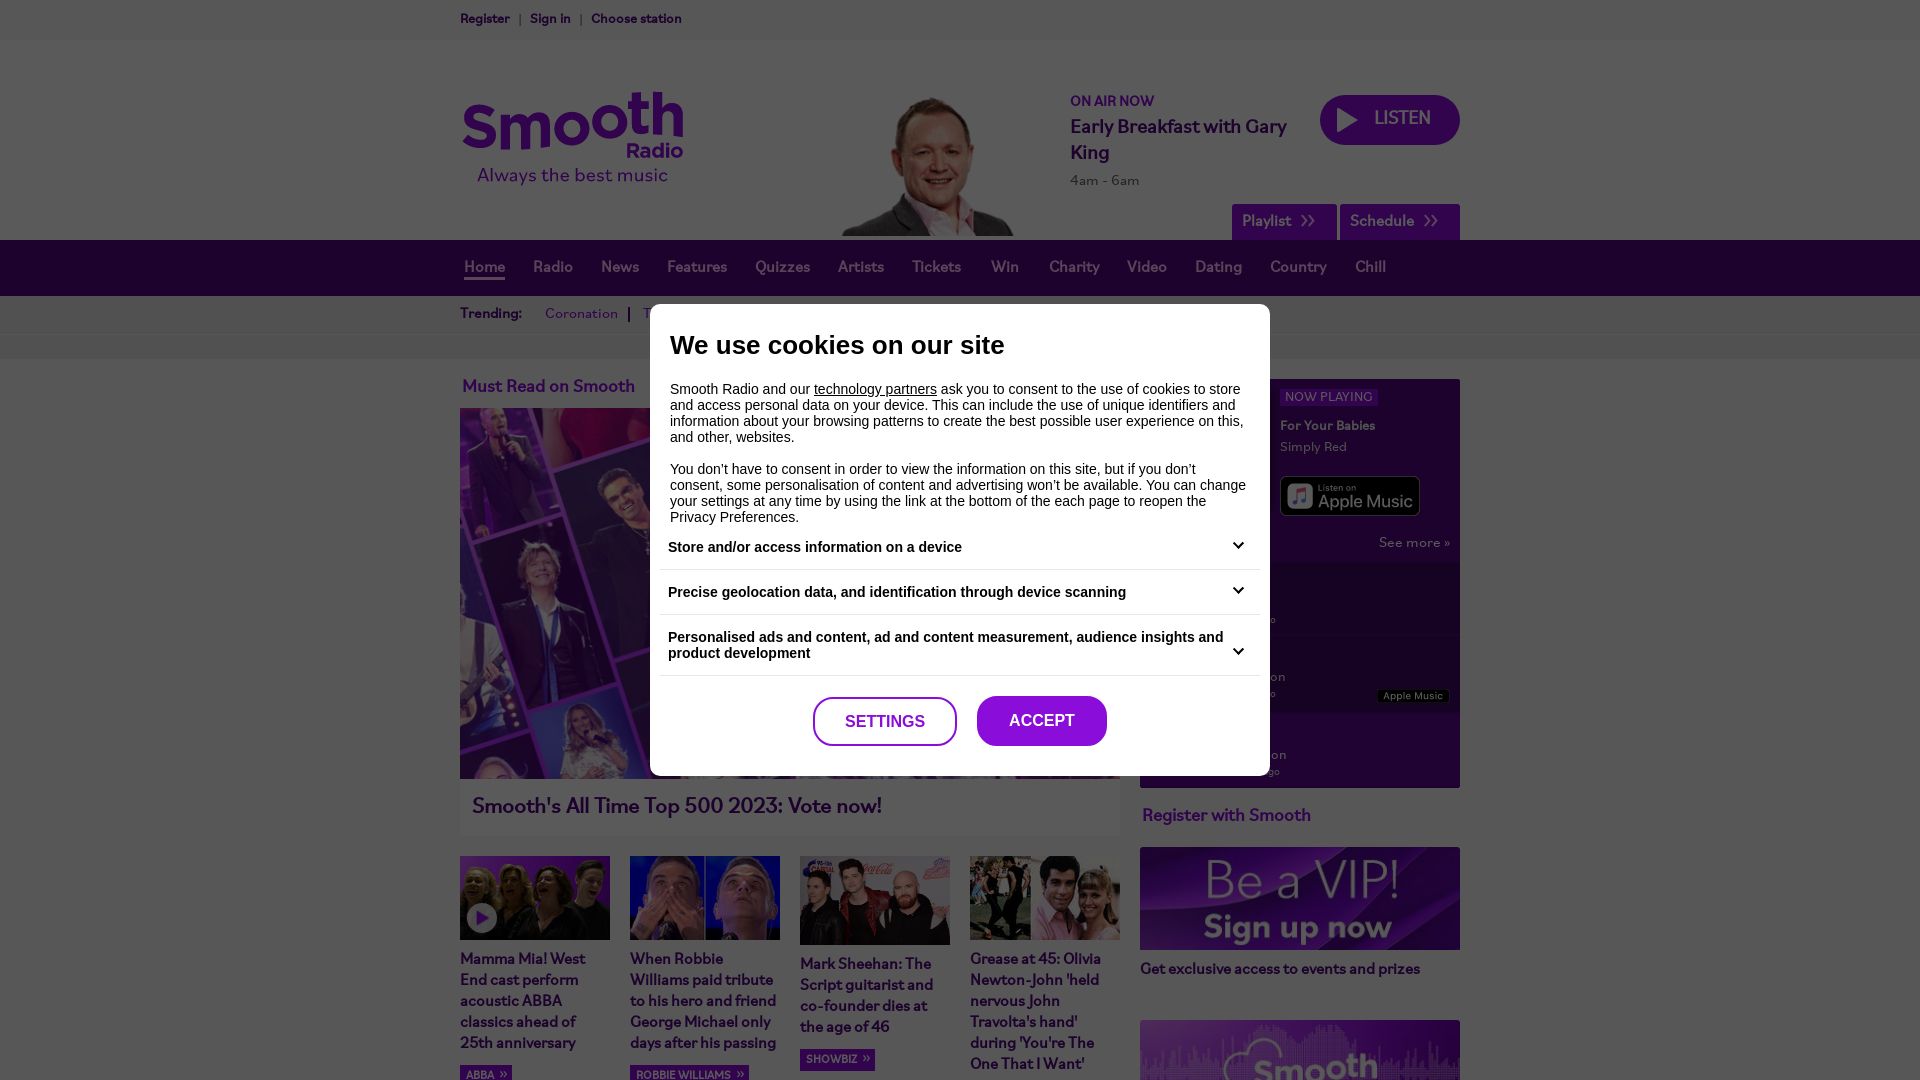 Website status smoothradio.com is   ONLINE